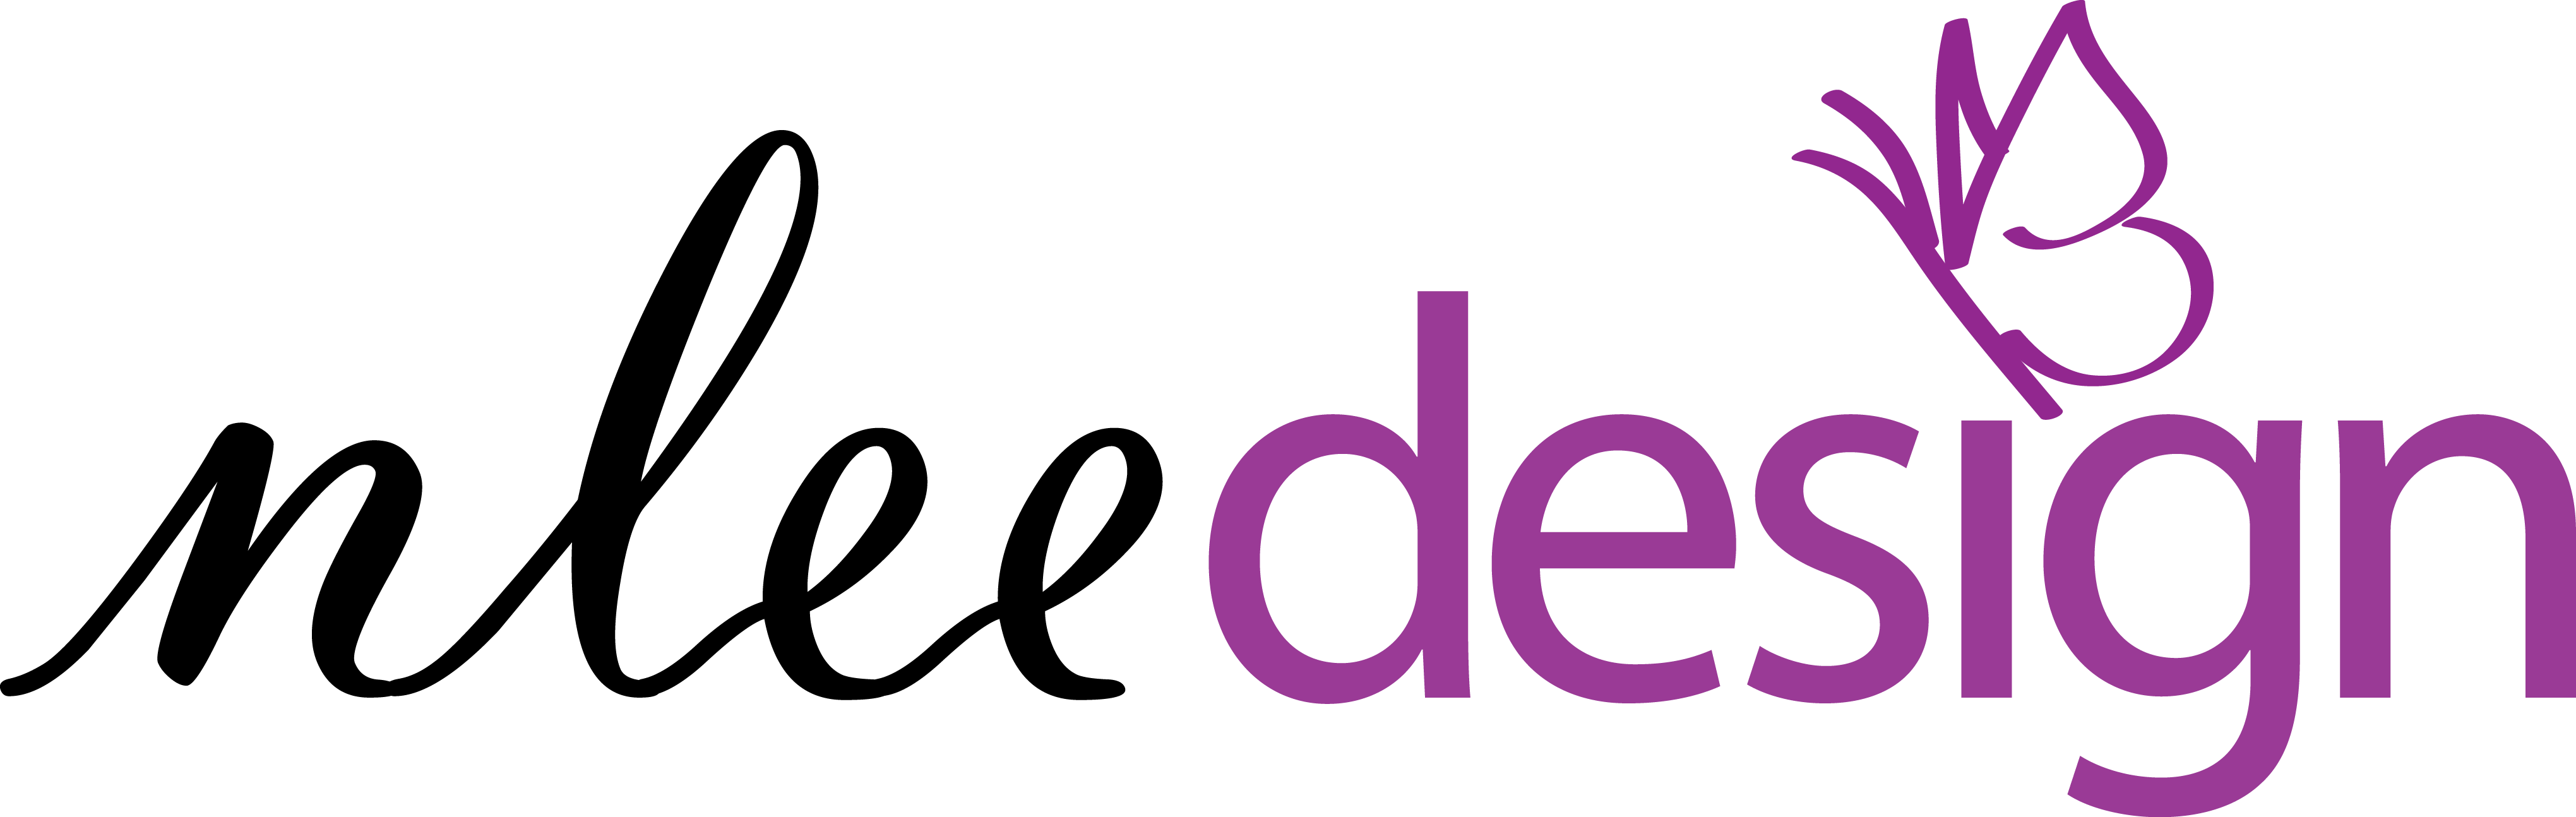 nleedesign logo